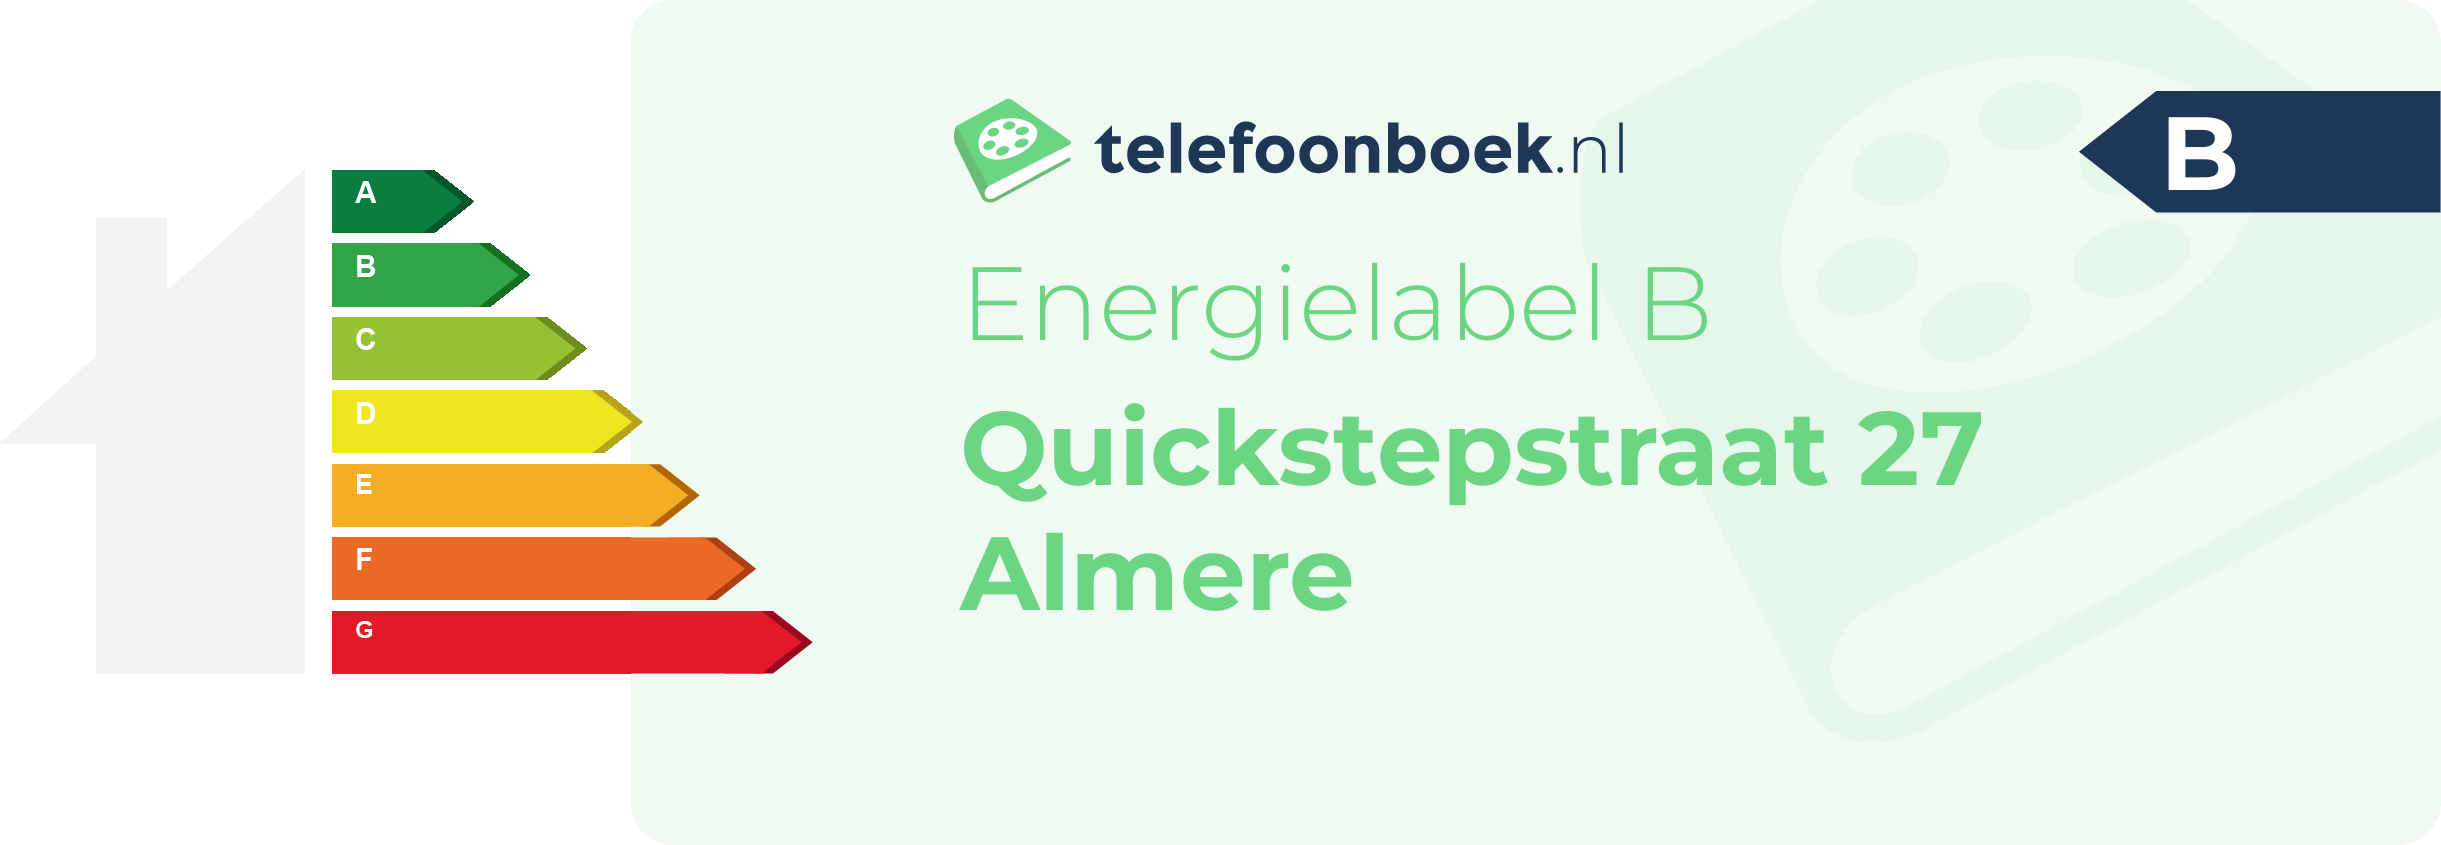 Energielabel Quickstepstraat 27 Almere